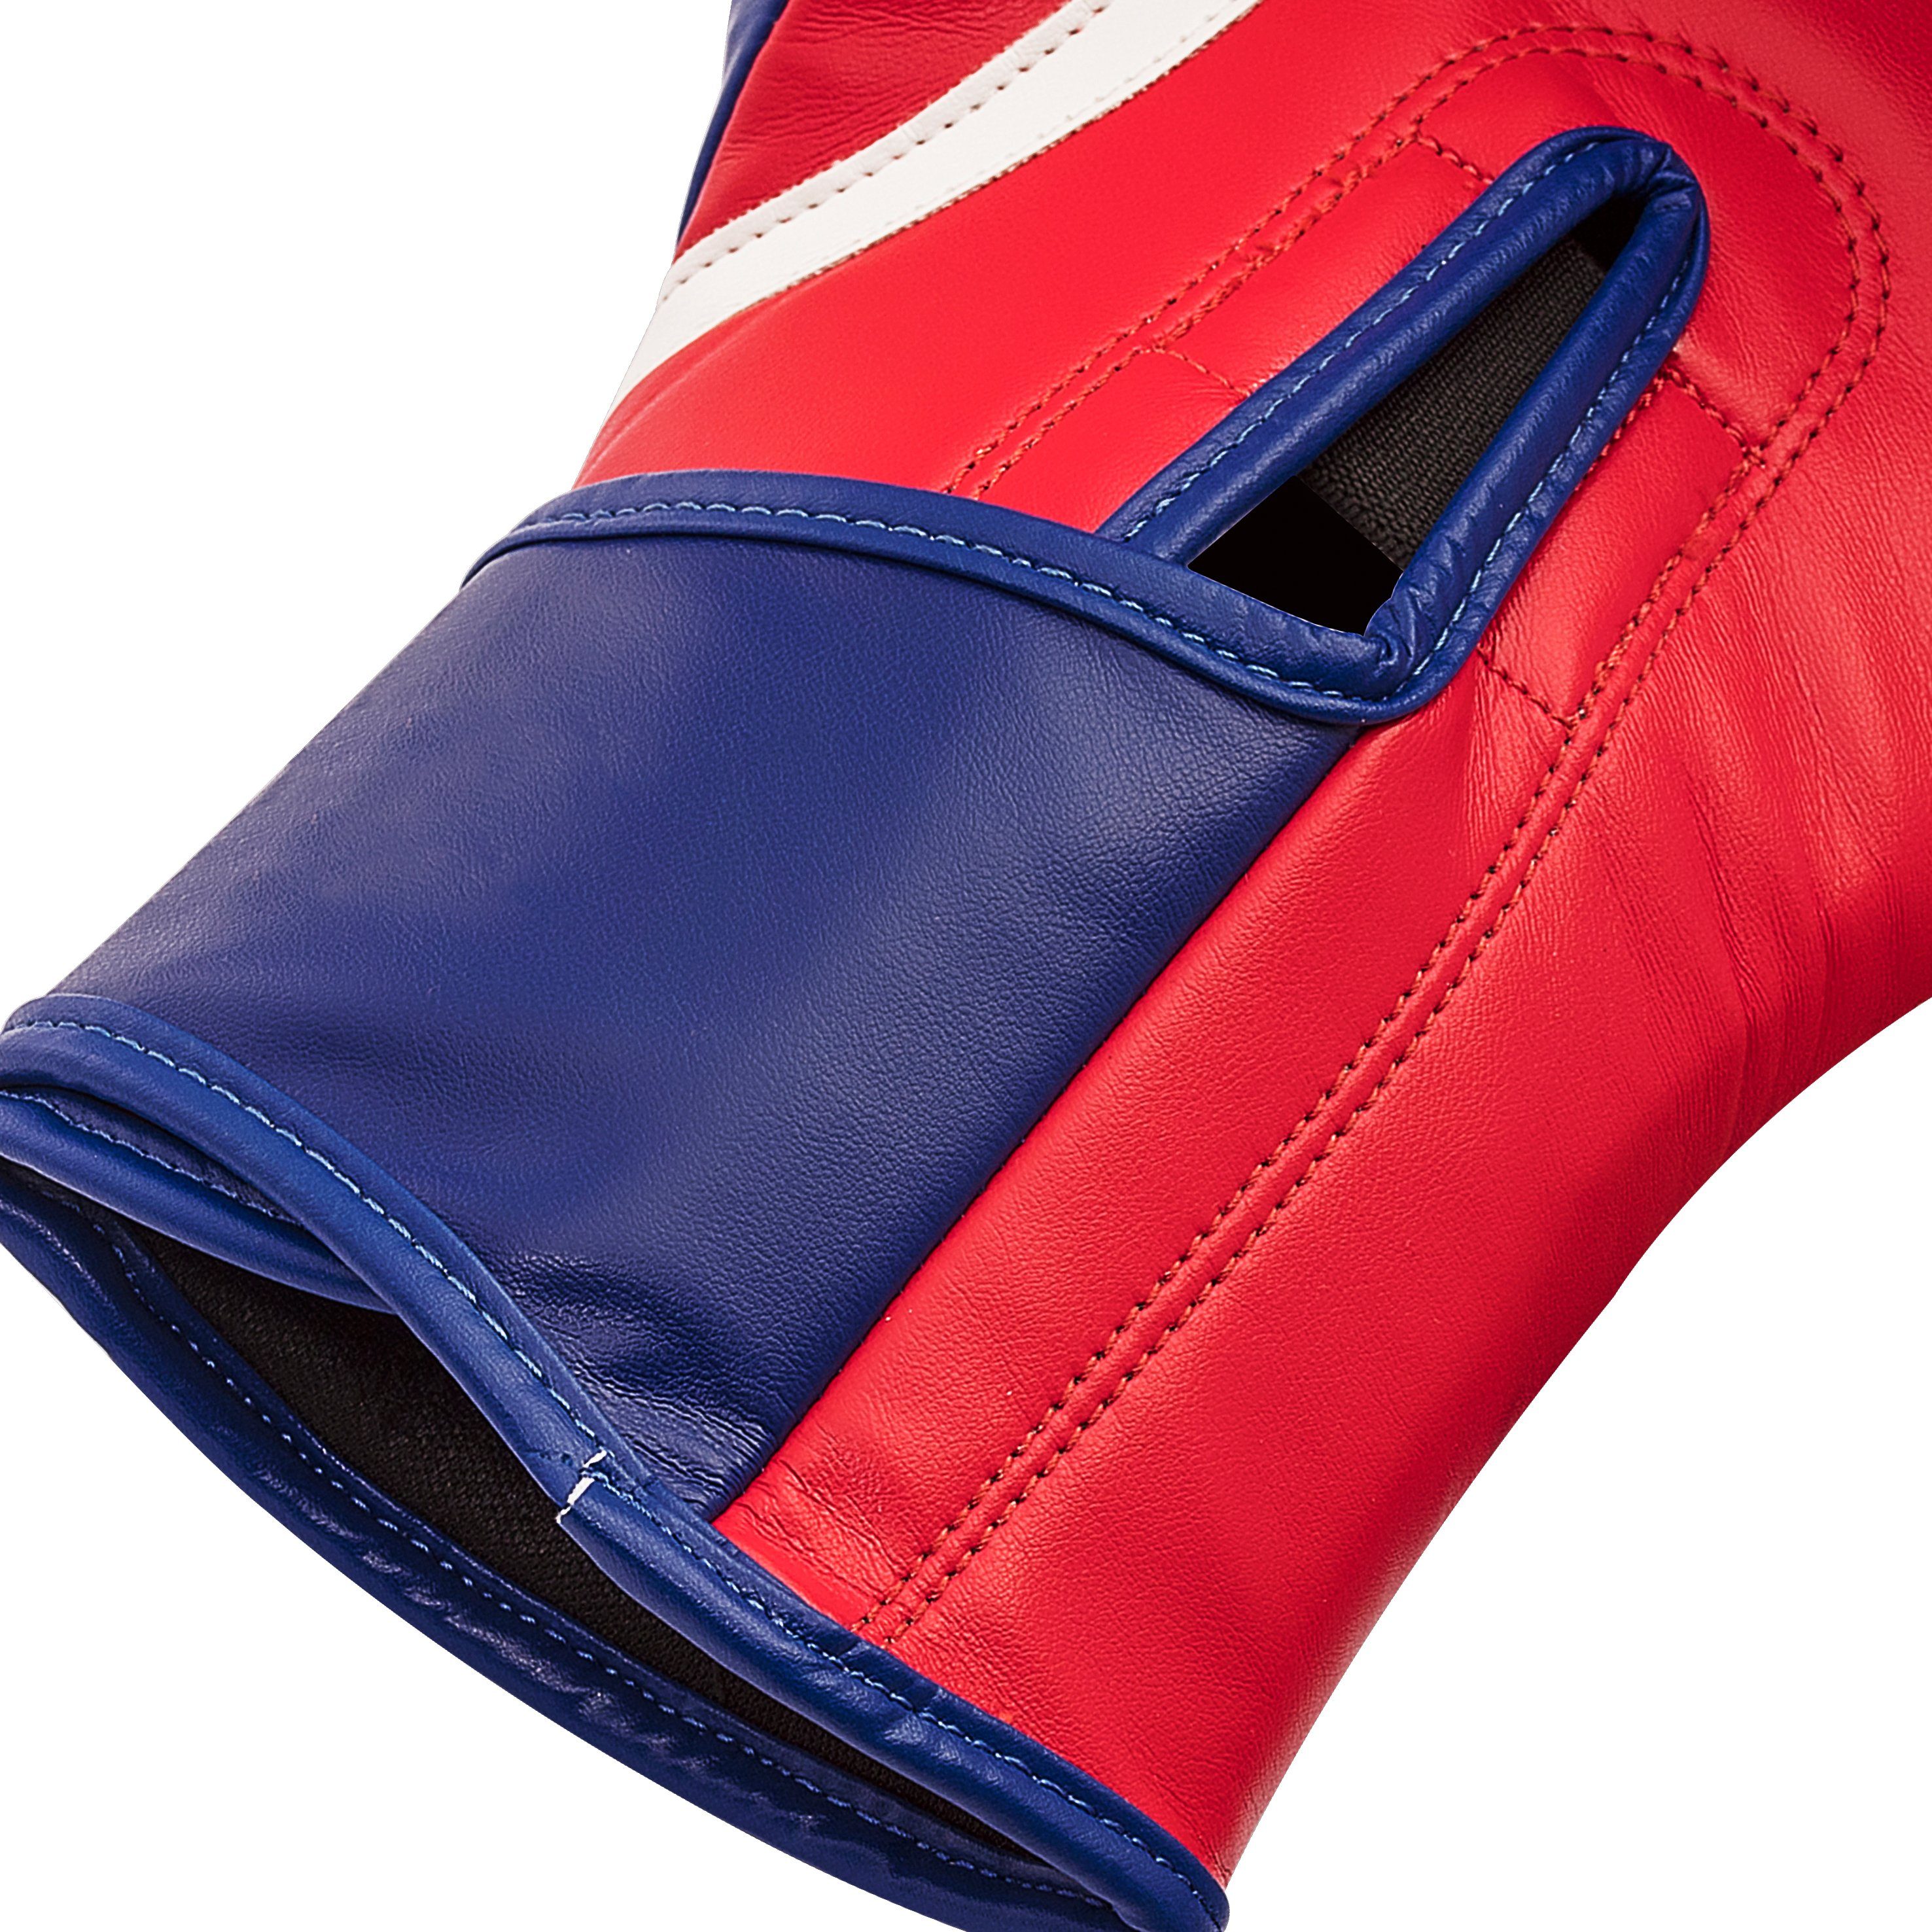 Performance adidas Boxhandschuhe blau/rot